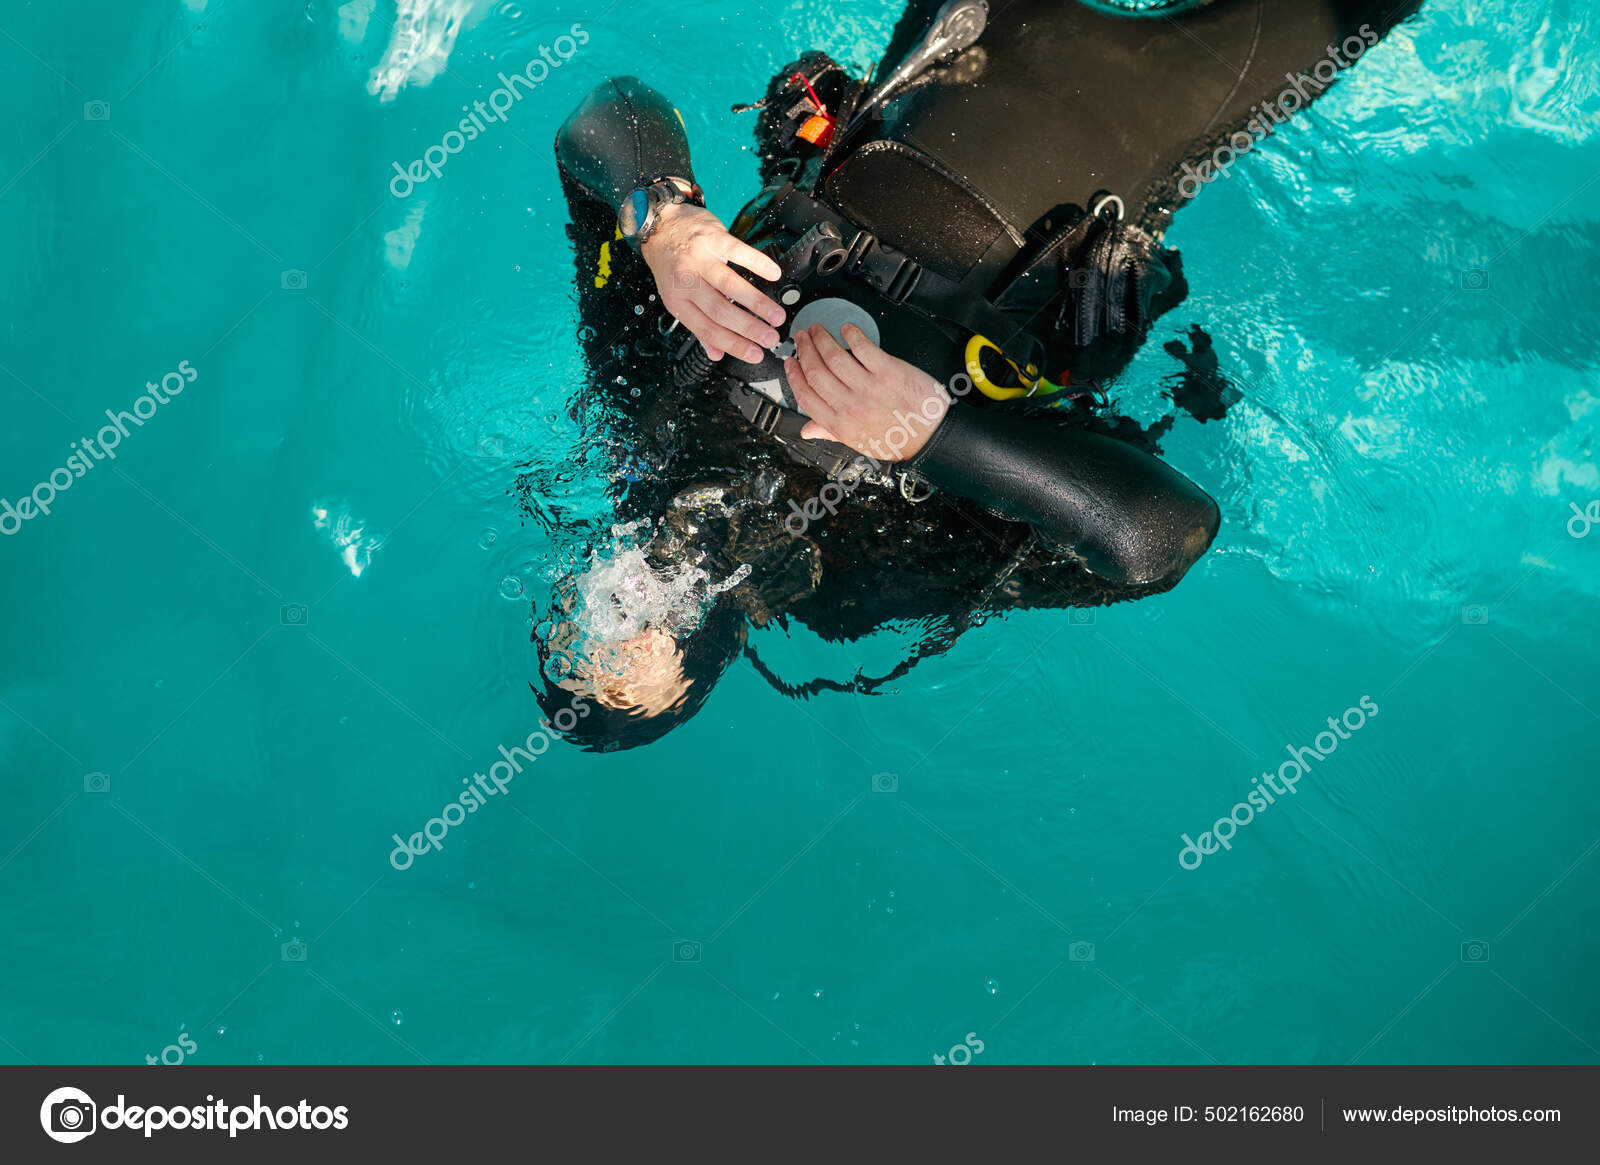 Skyros Diving: 2.5-hour Discover Scuba Diving Experience